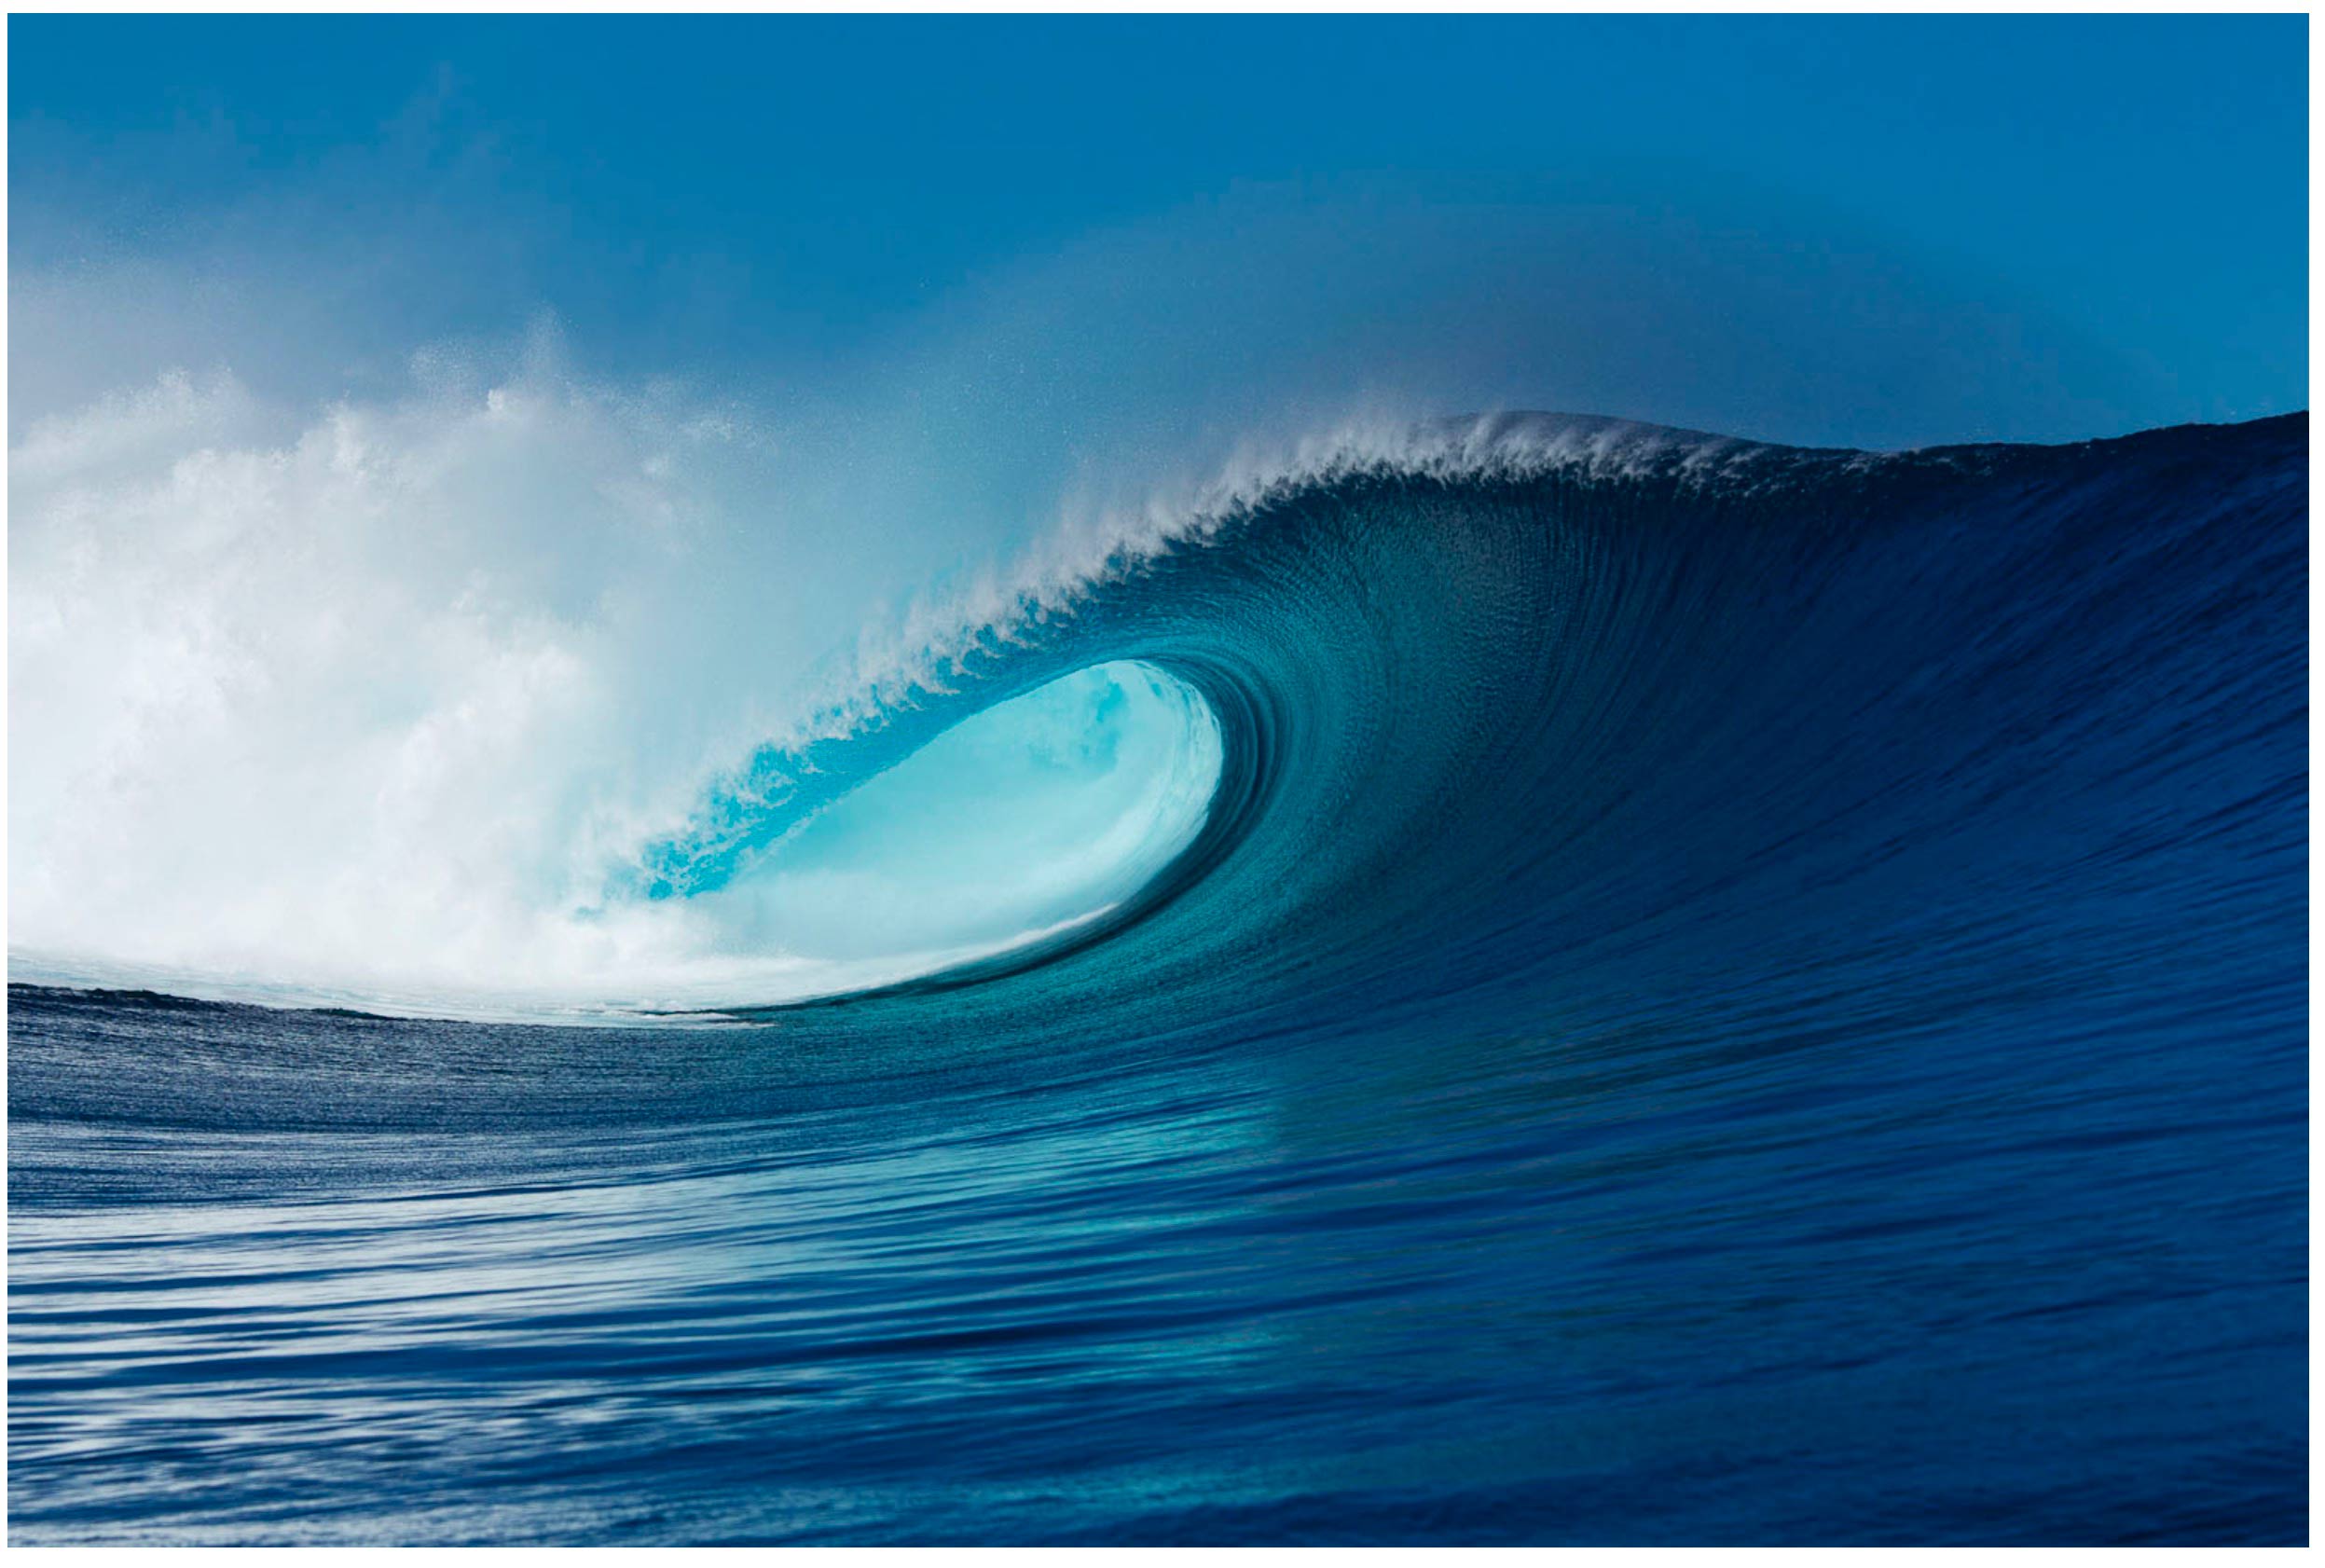 rodd-owen-ocean-surf-photography-for-sale-139.jpg